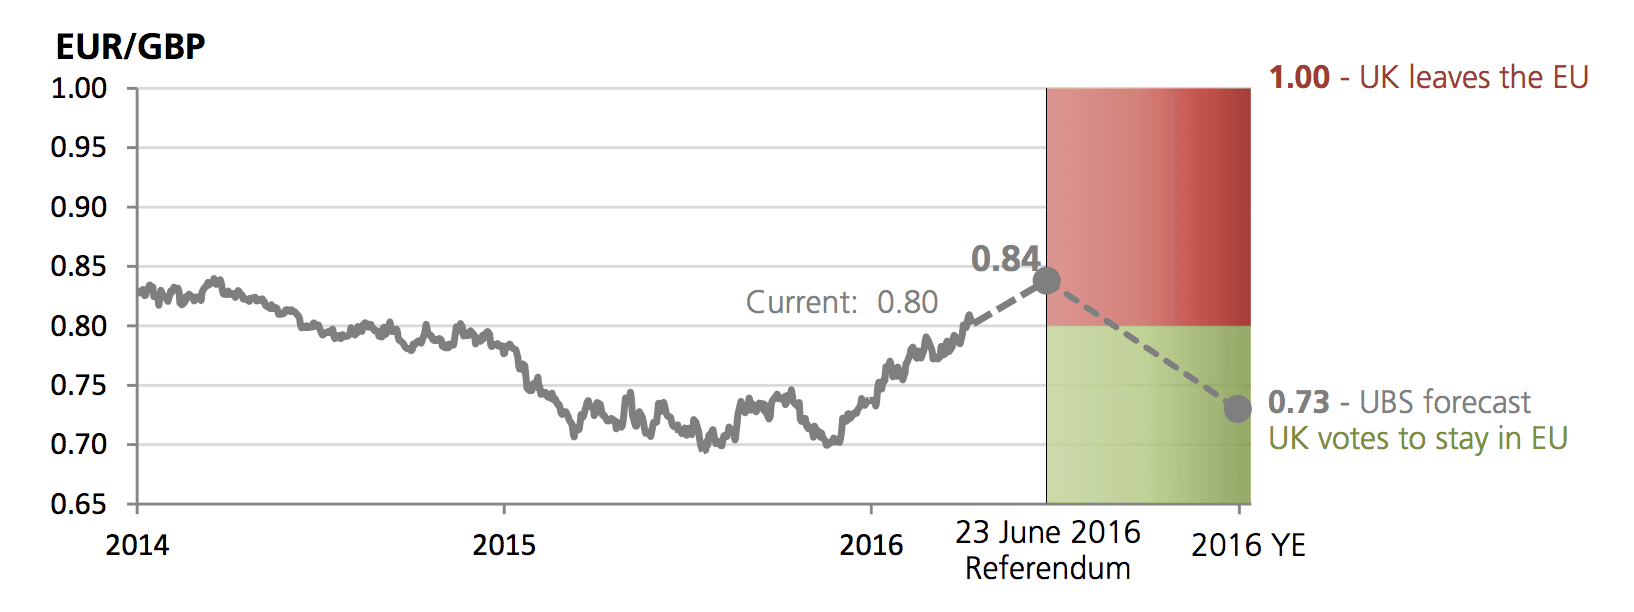 Euro to pound sterling movement scenarios